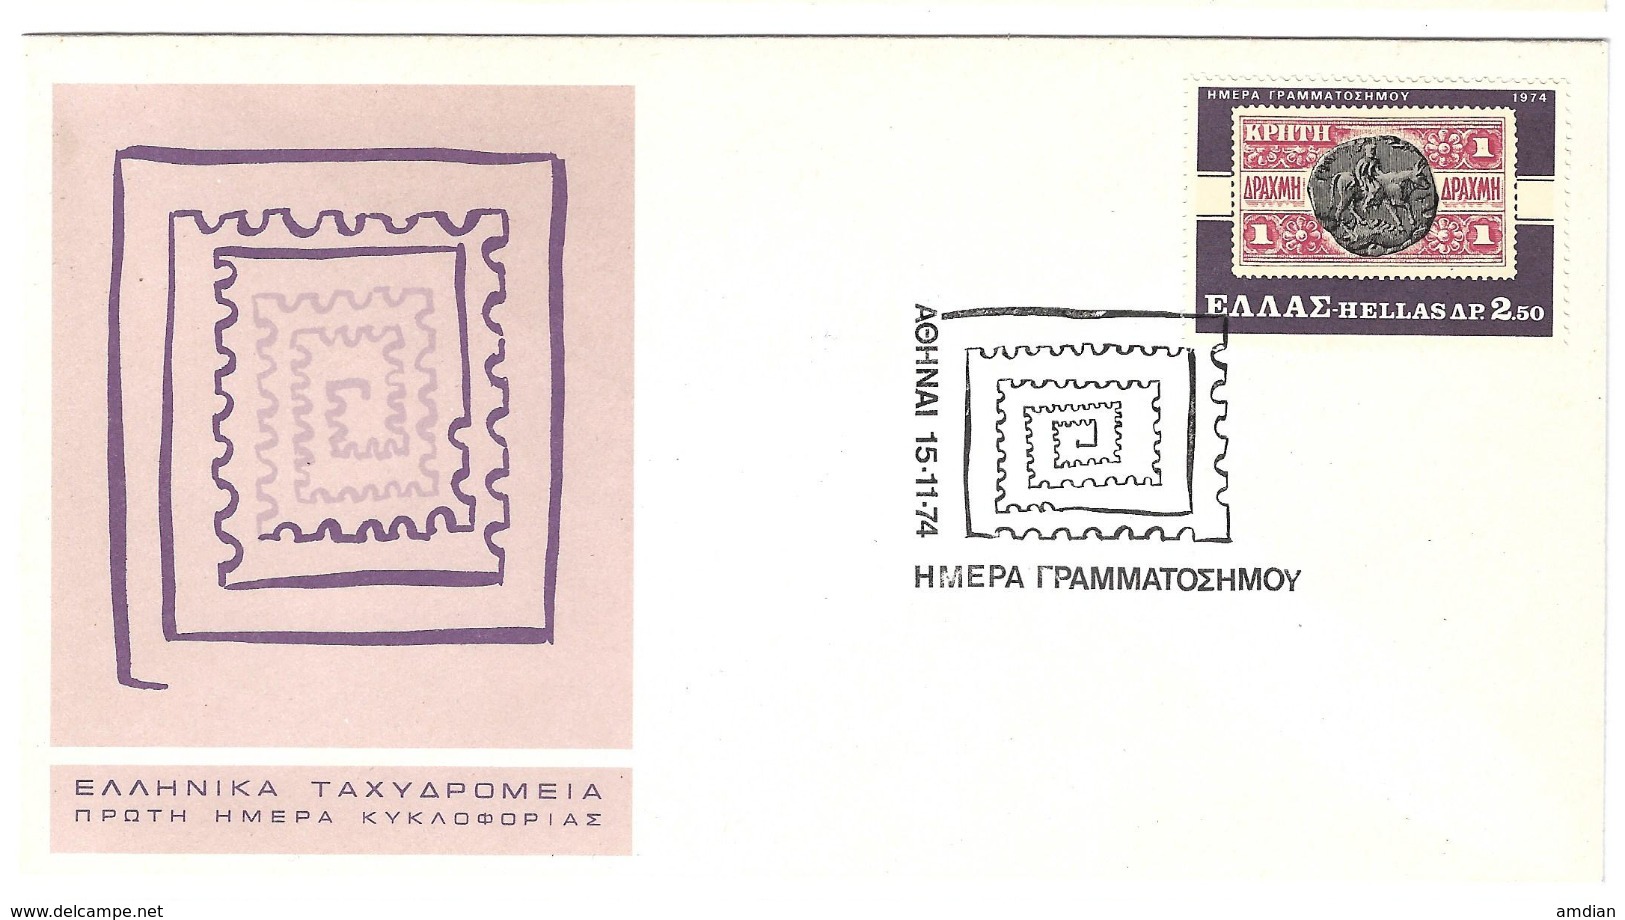 GREECE / GRECE FDC 1974 - STAMP DAY, REPRESENTATION OF OLD CRETA STAMP - FDC